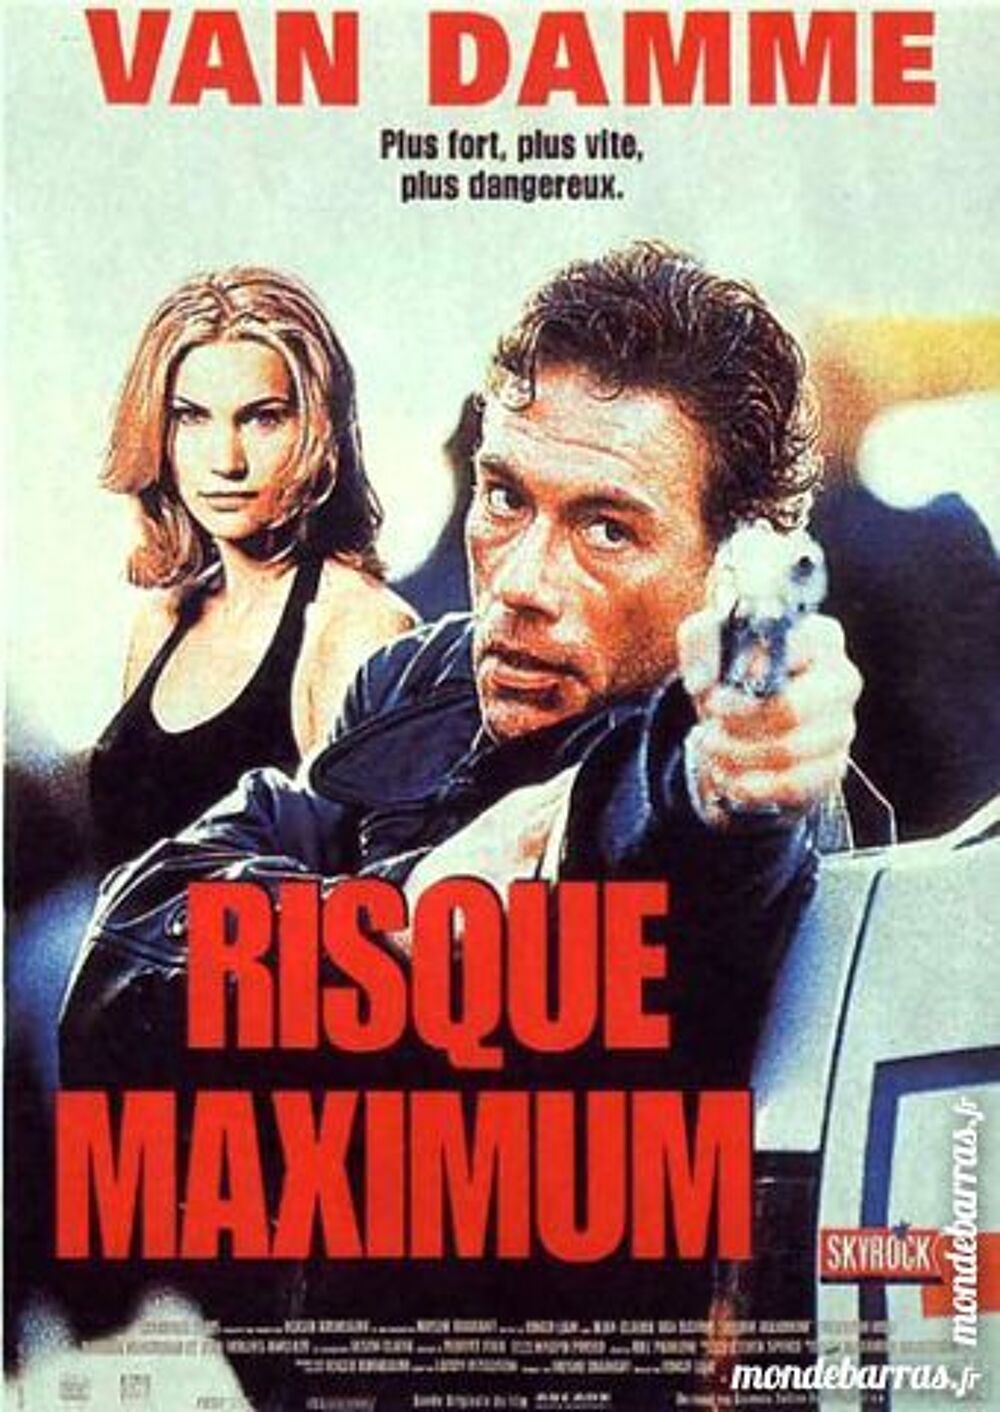 Dvd : Risque maximum (168) DVD et blu-ray